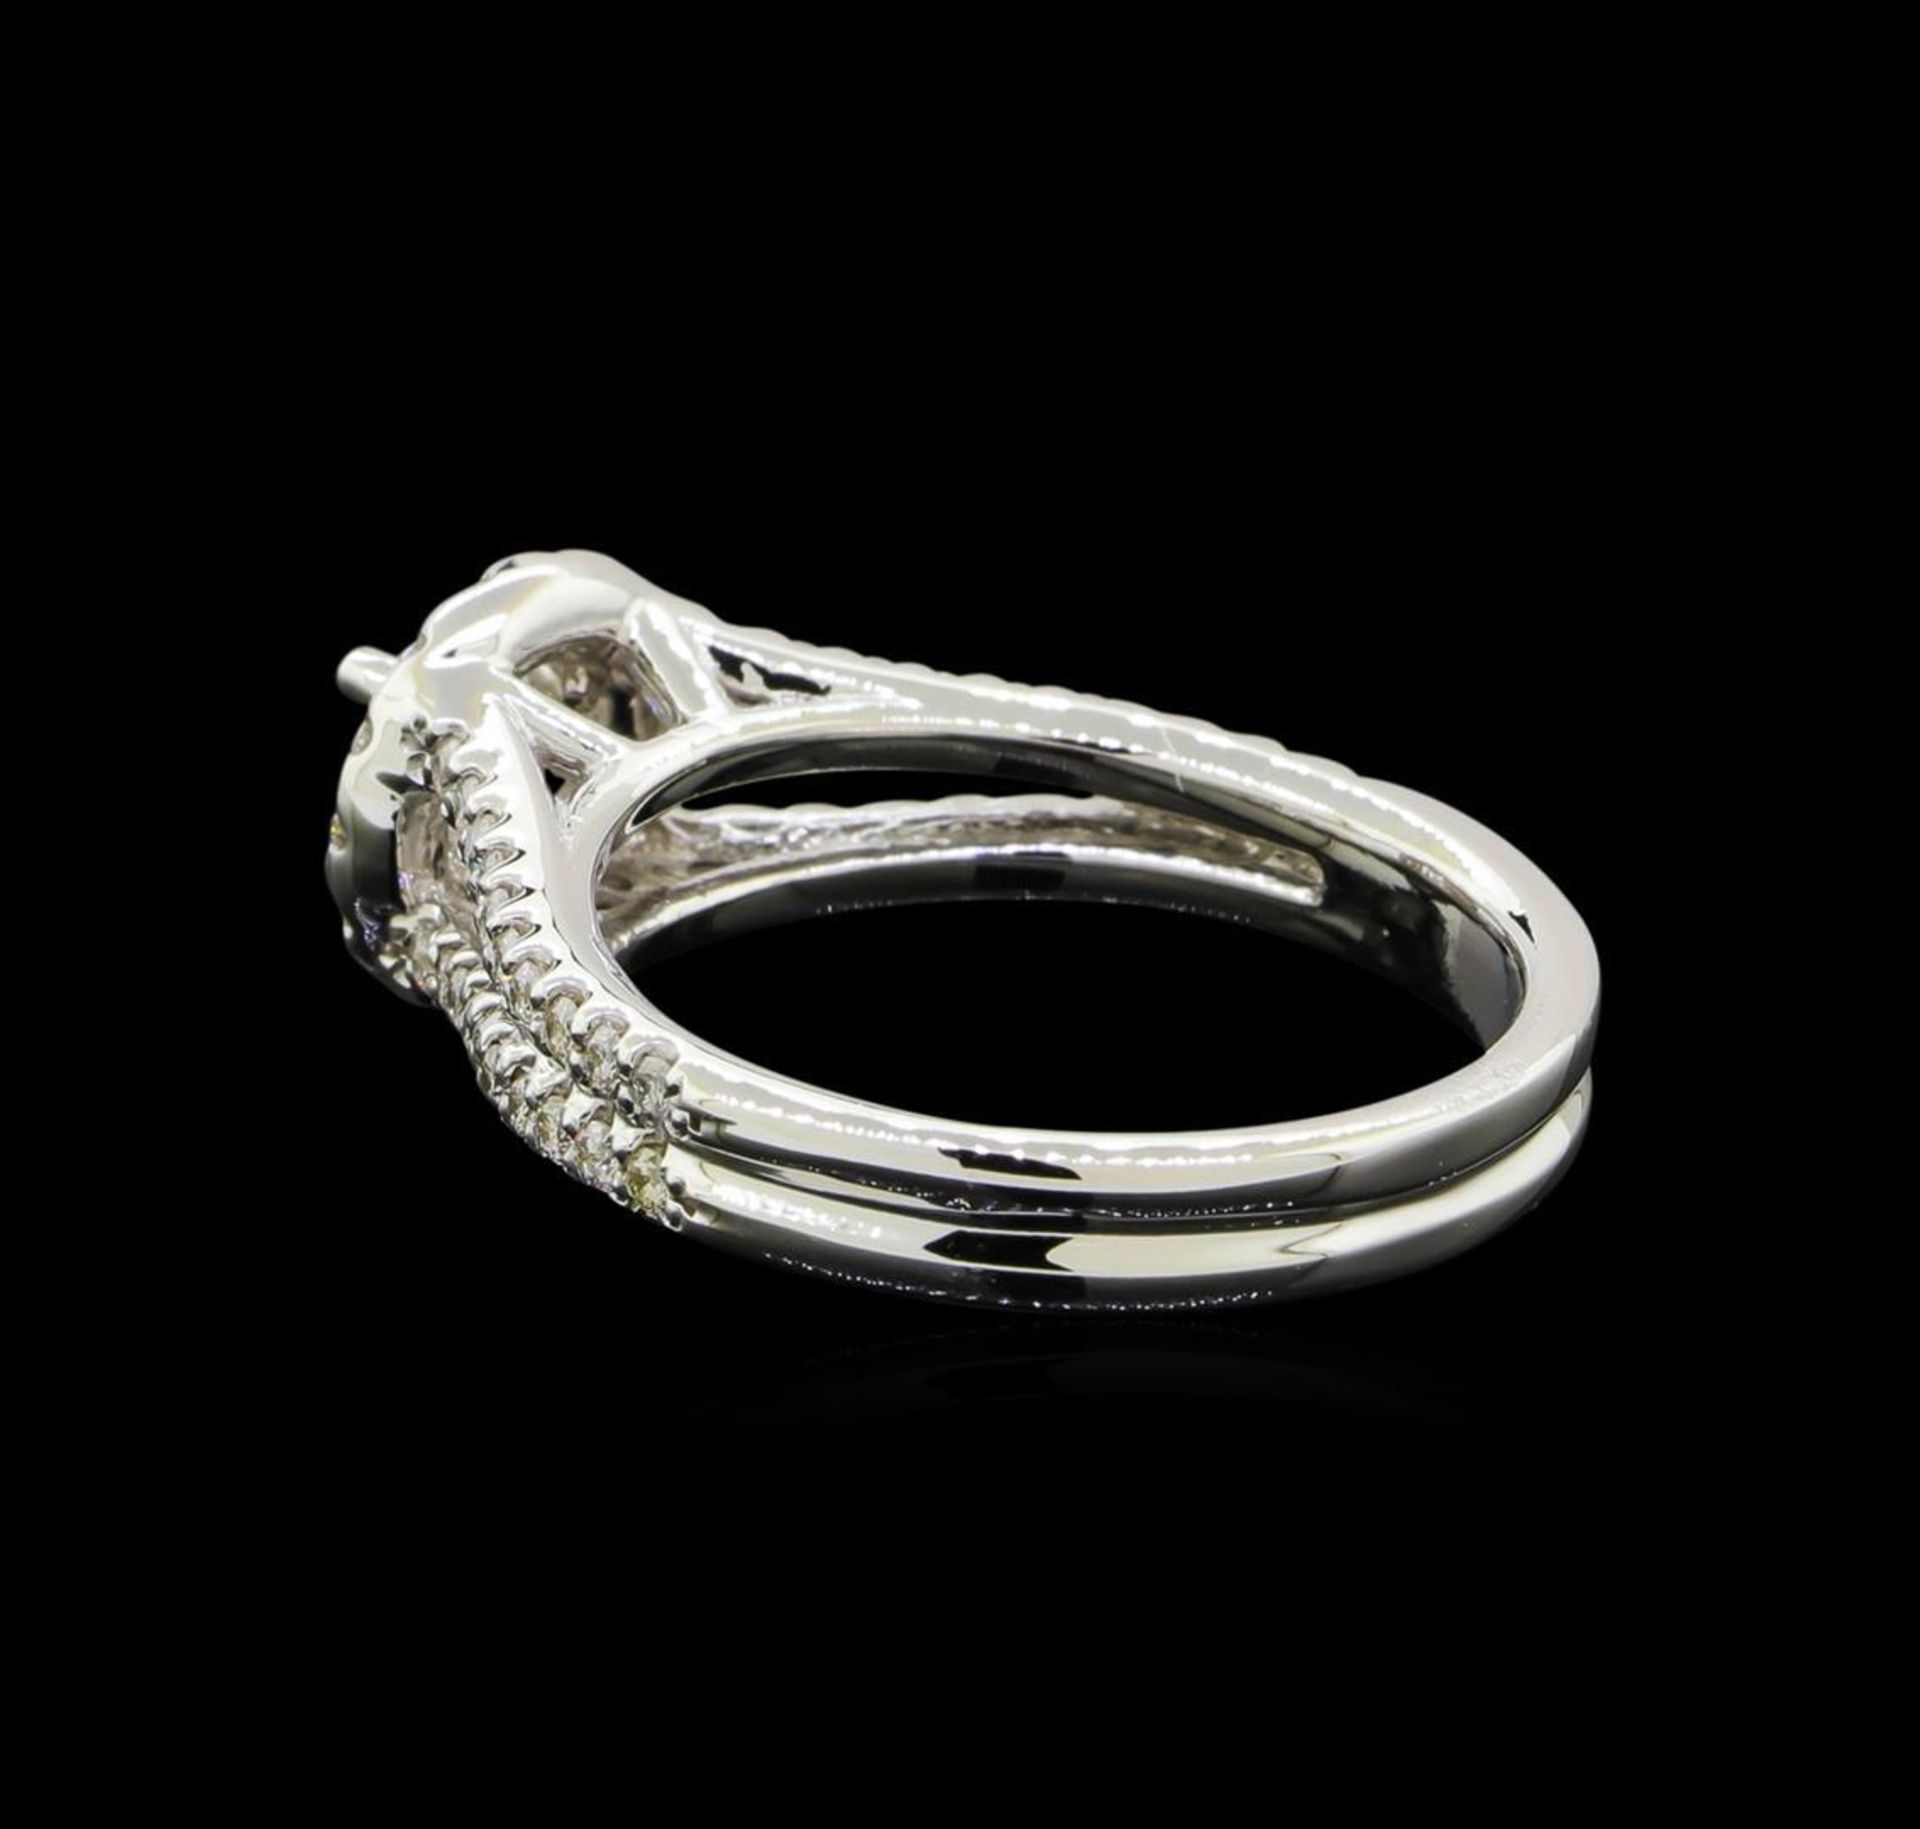 1.08 ctw Diamond Ring - 14KT White Gold - Image 3 of 5